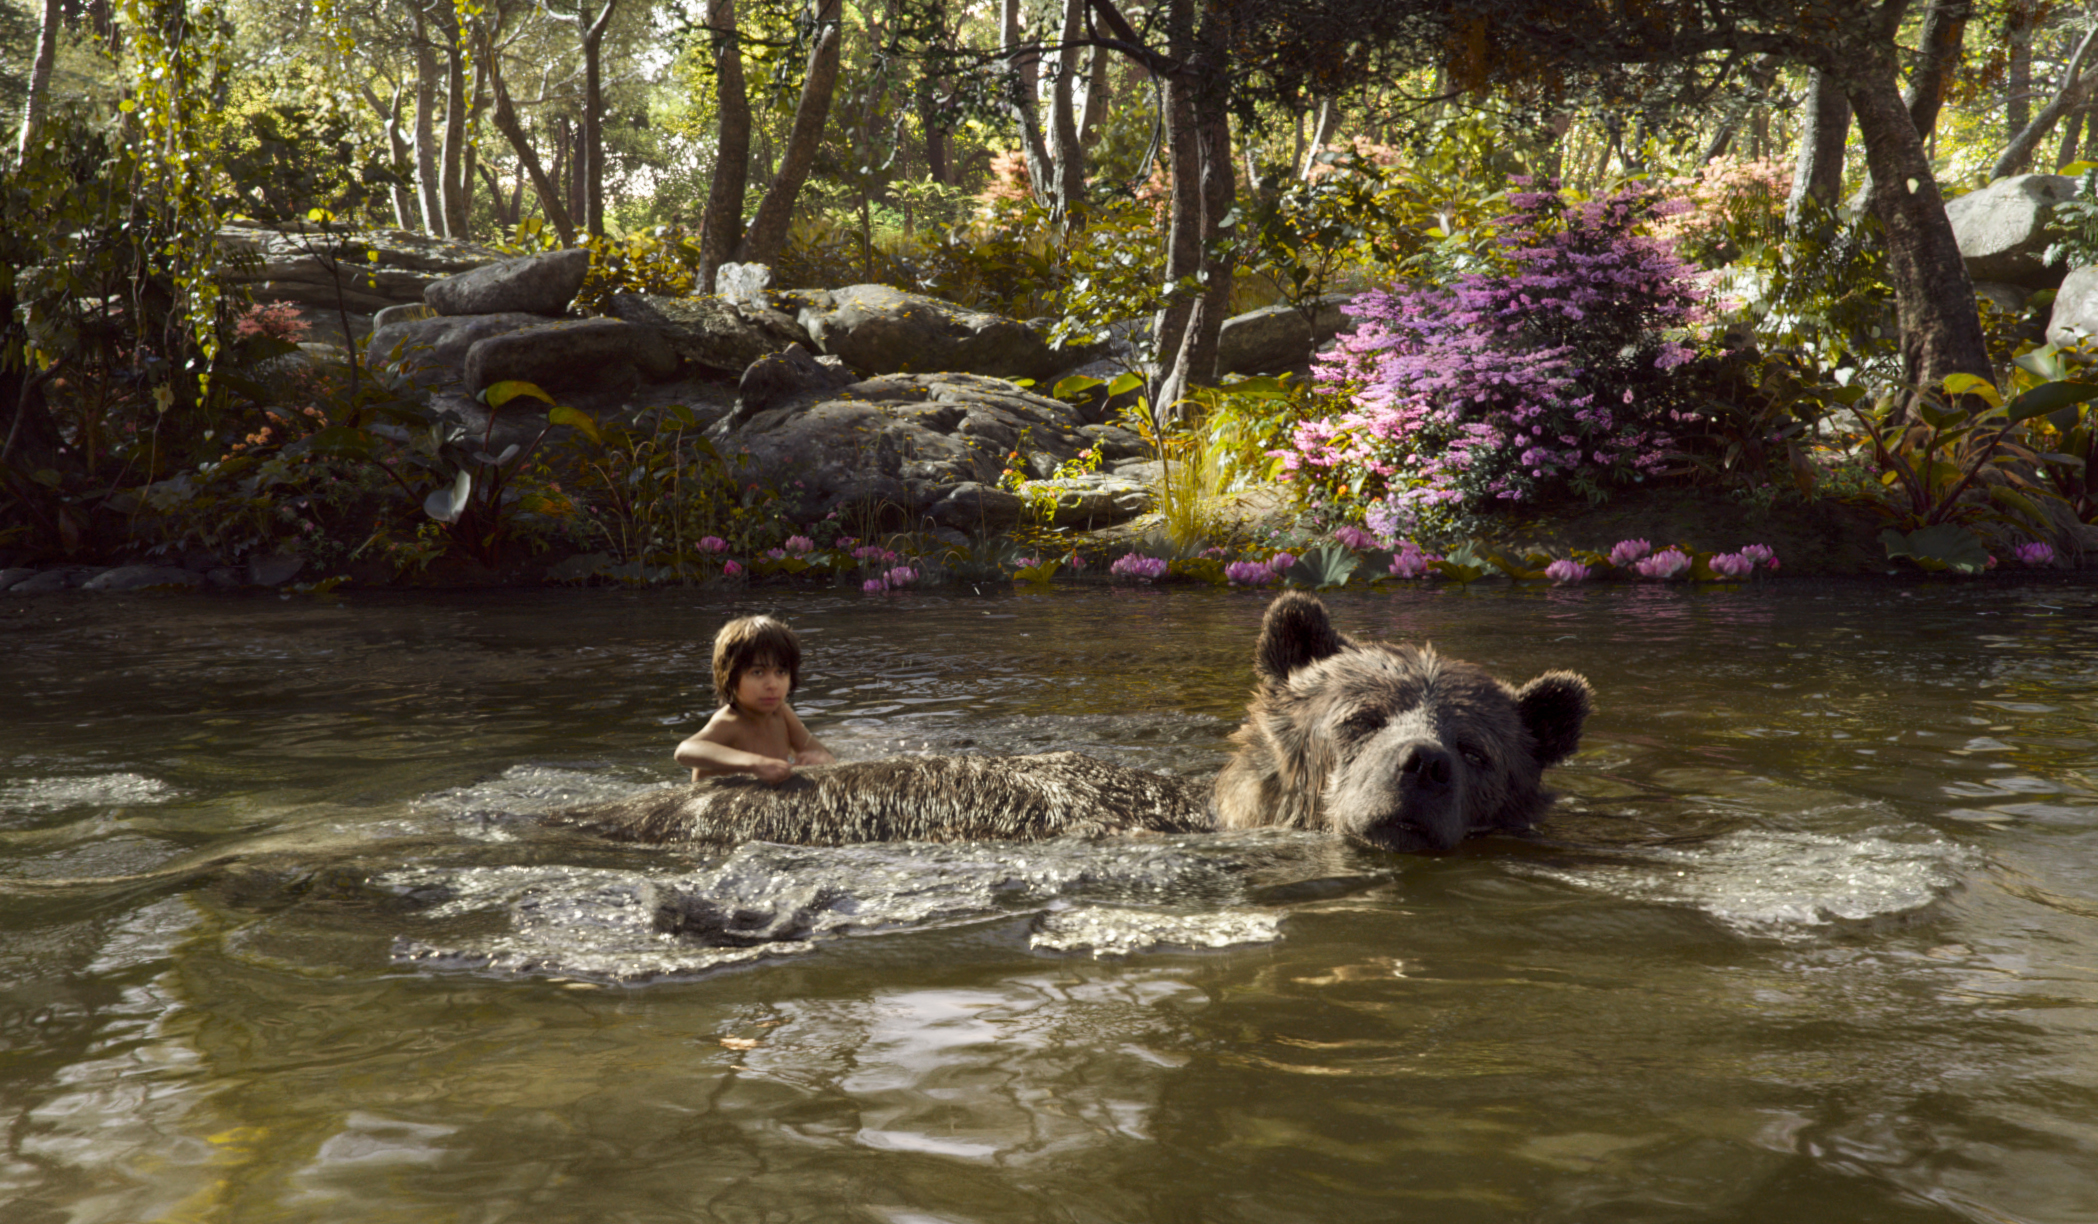 Honest Trailers Take Aim at "The Jungle Book"